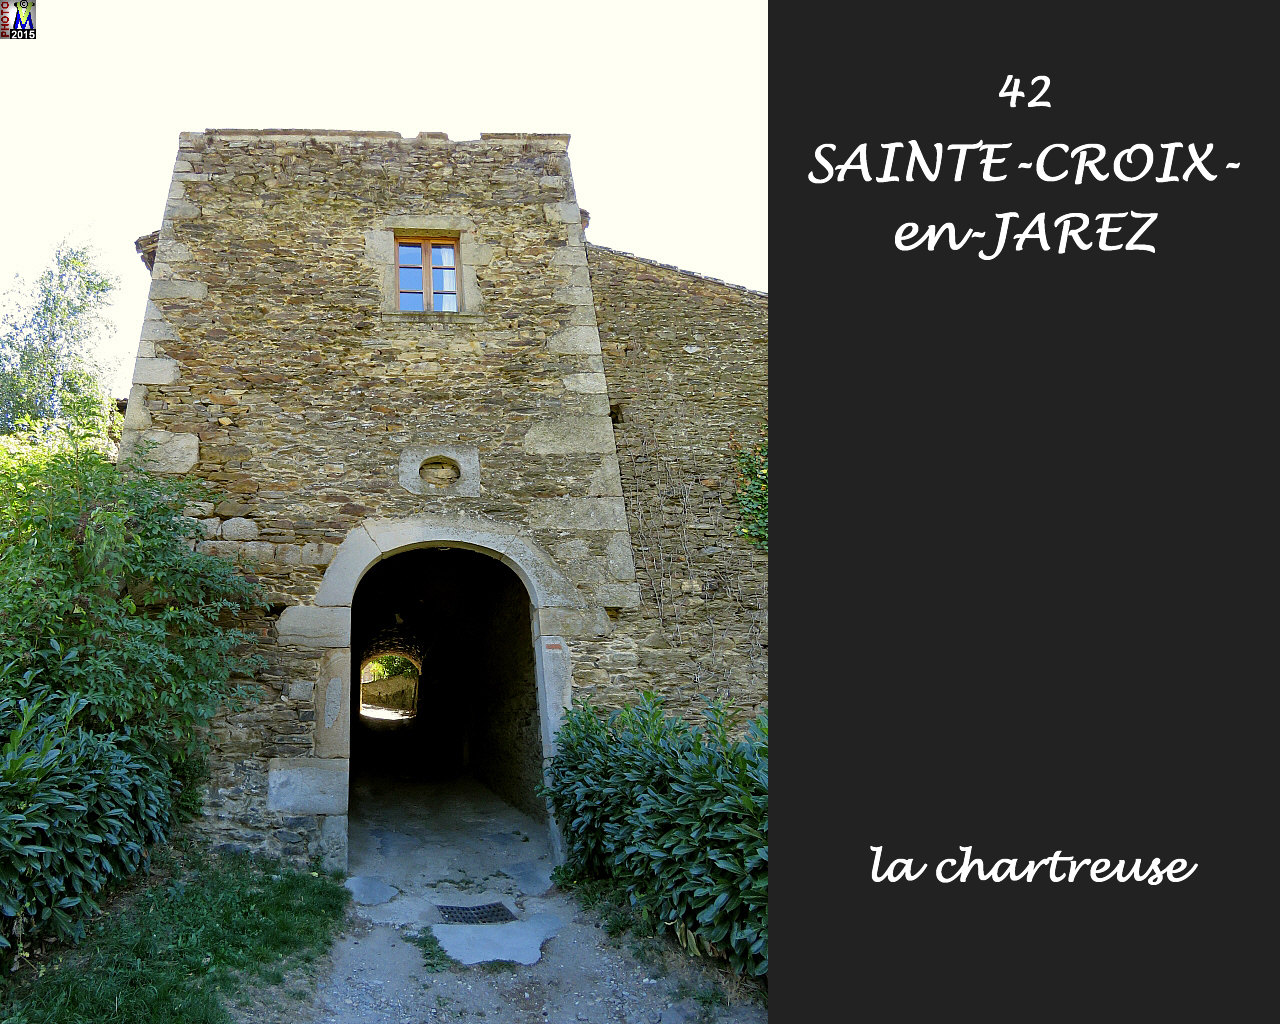 42SteCROIX-JAREZ_chartreuse_118.jpg